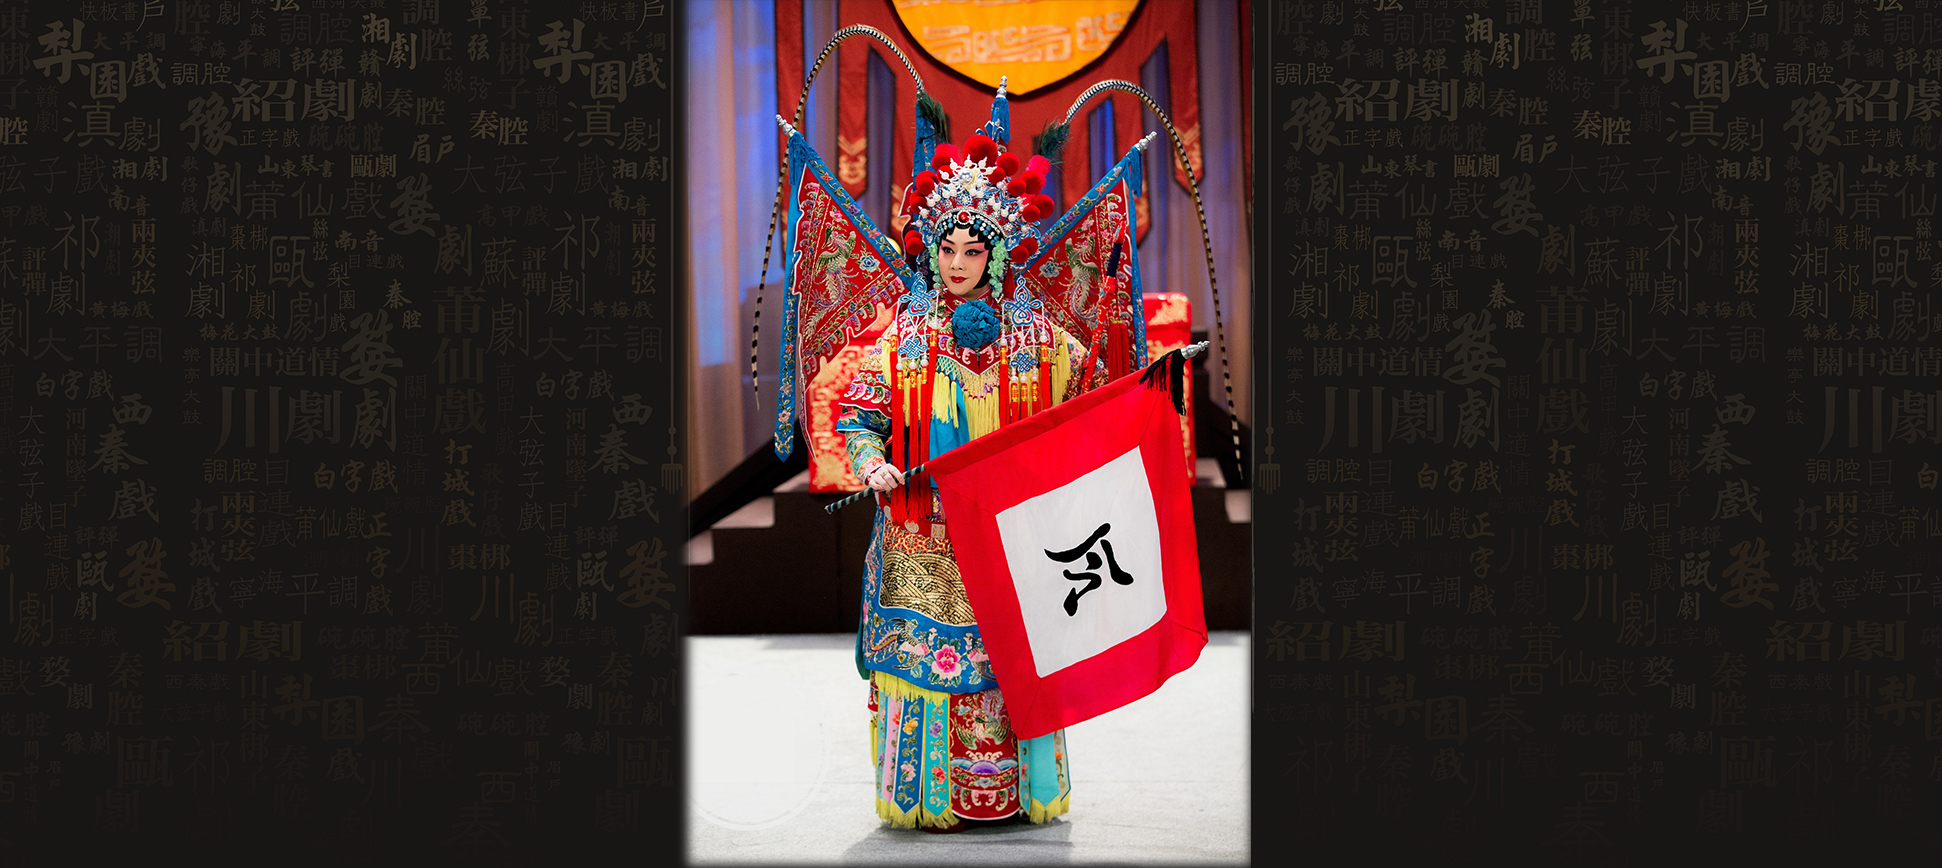 Peking Opera Masters North and South: China National Peking Opera Company and Shanghai Jingju Theatre Company